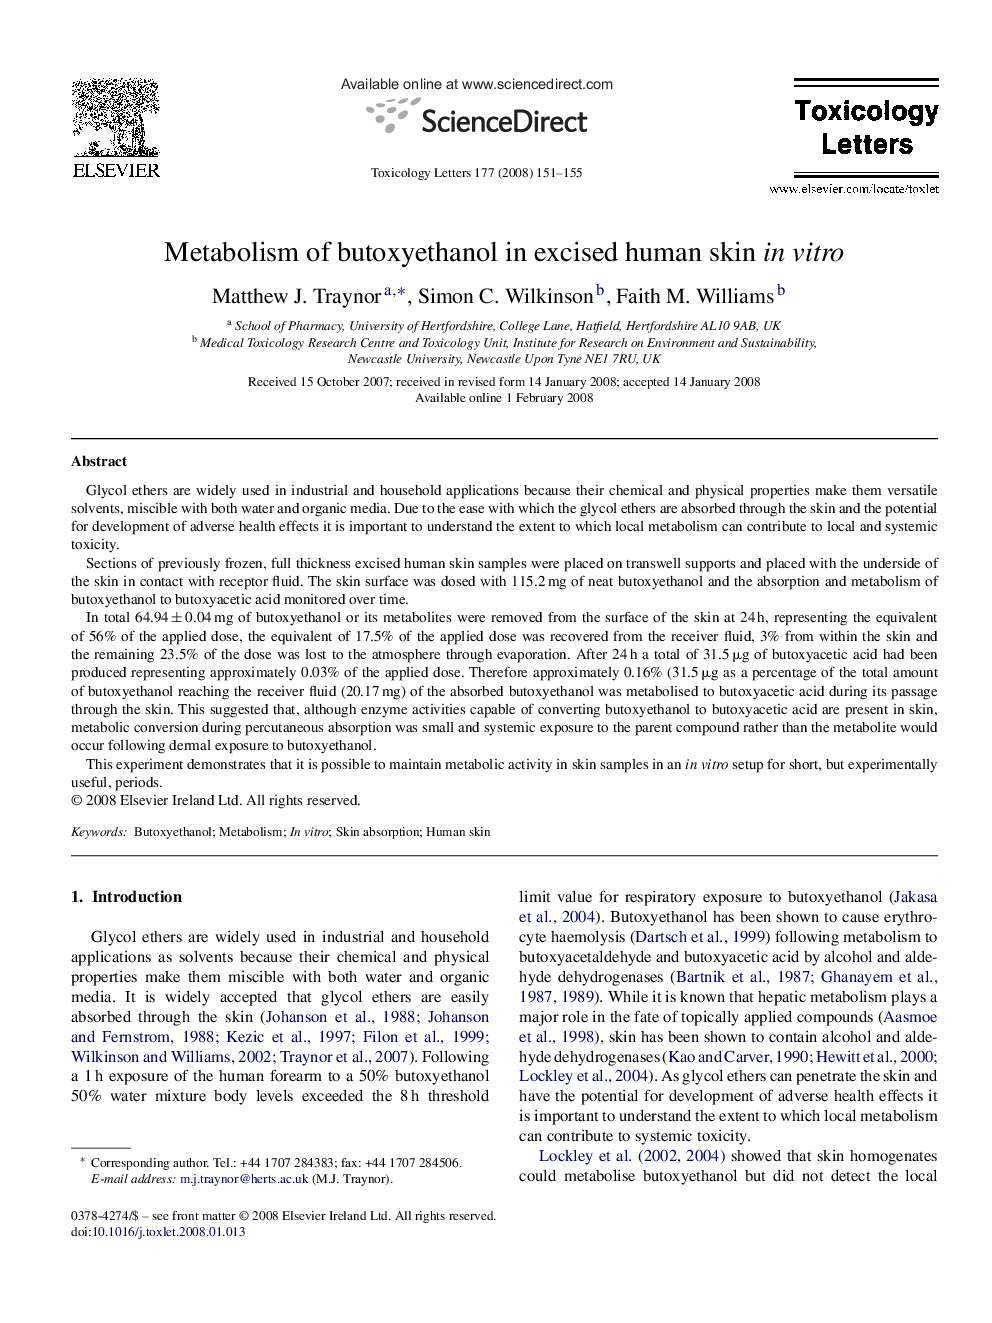 Metabolism of butoxyethanol in excised human skin in vitro